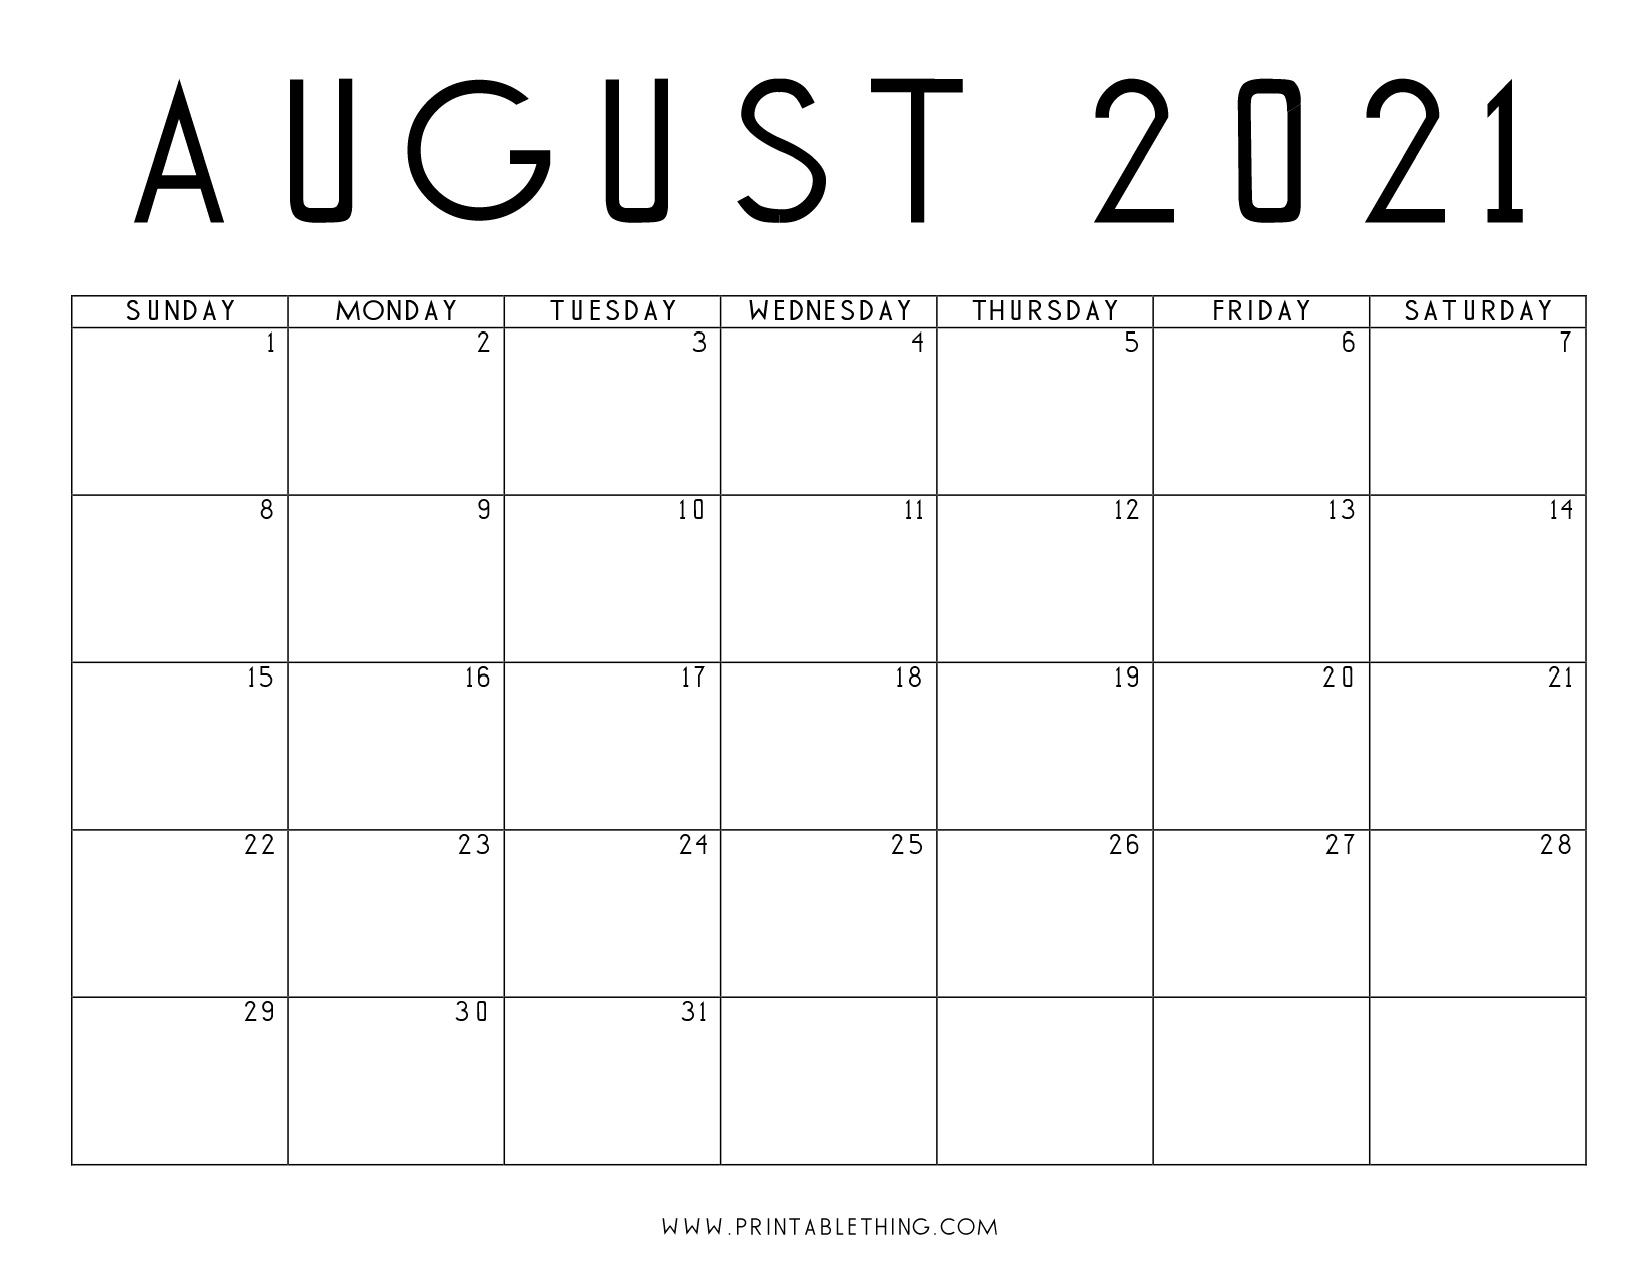 August 2021 Calendar Pdf, August 2021 Calendar Image, Print Pdf Free Printable August 2021 Calendar